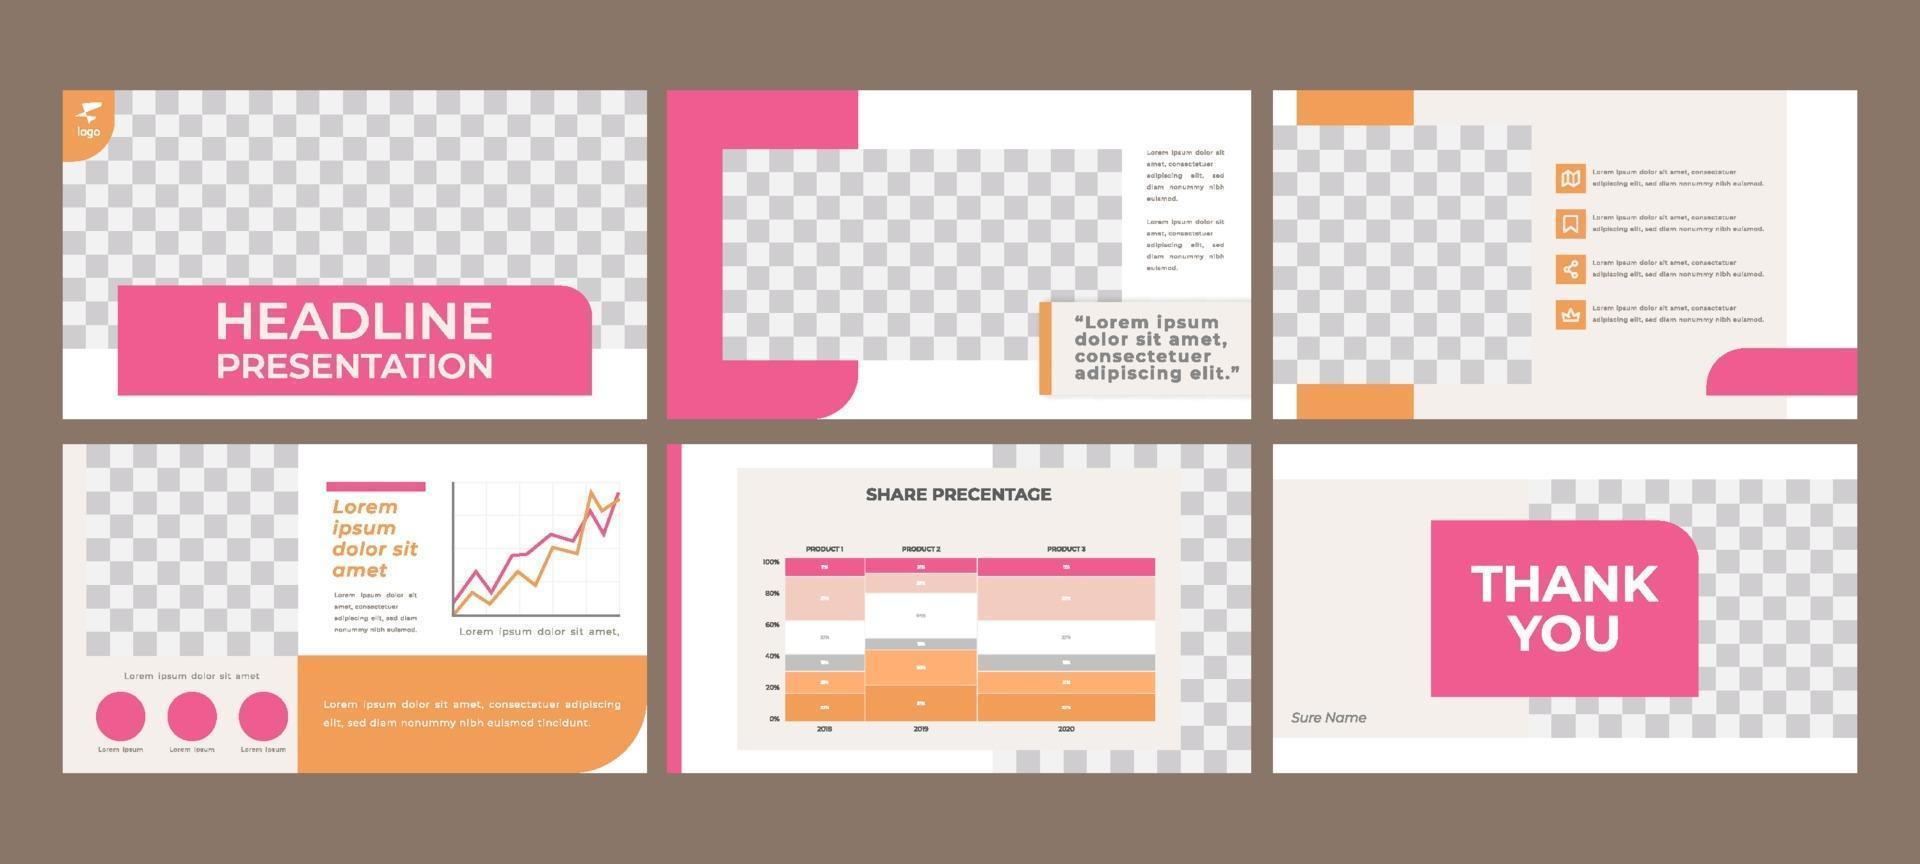 Minimalist Corporate Presentation Slide Template vector